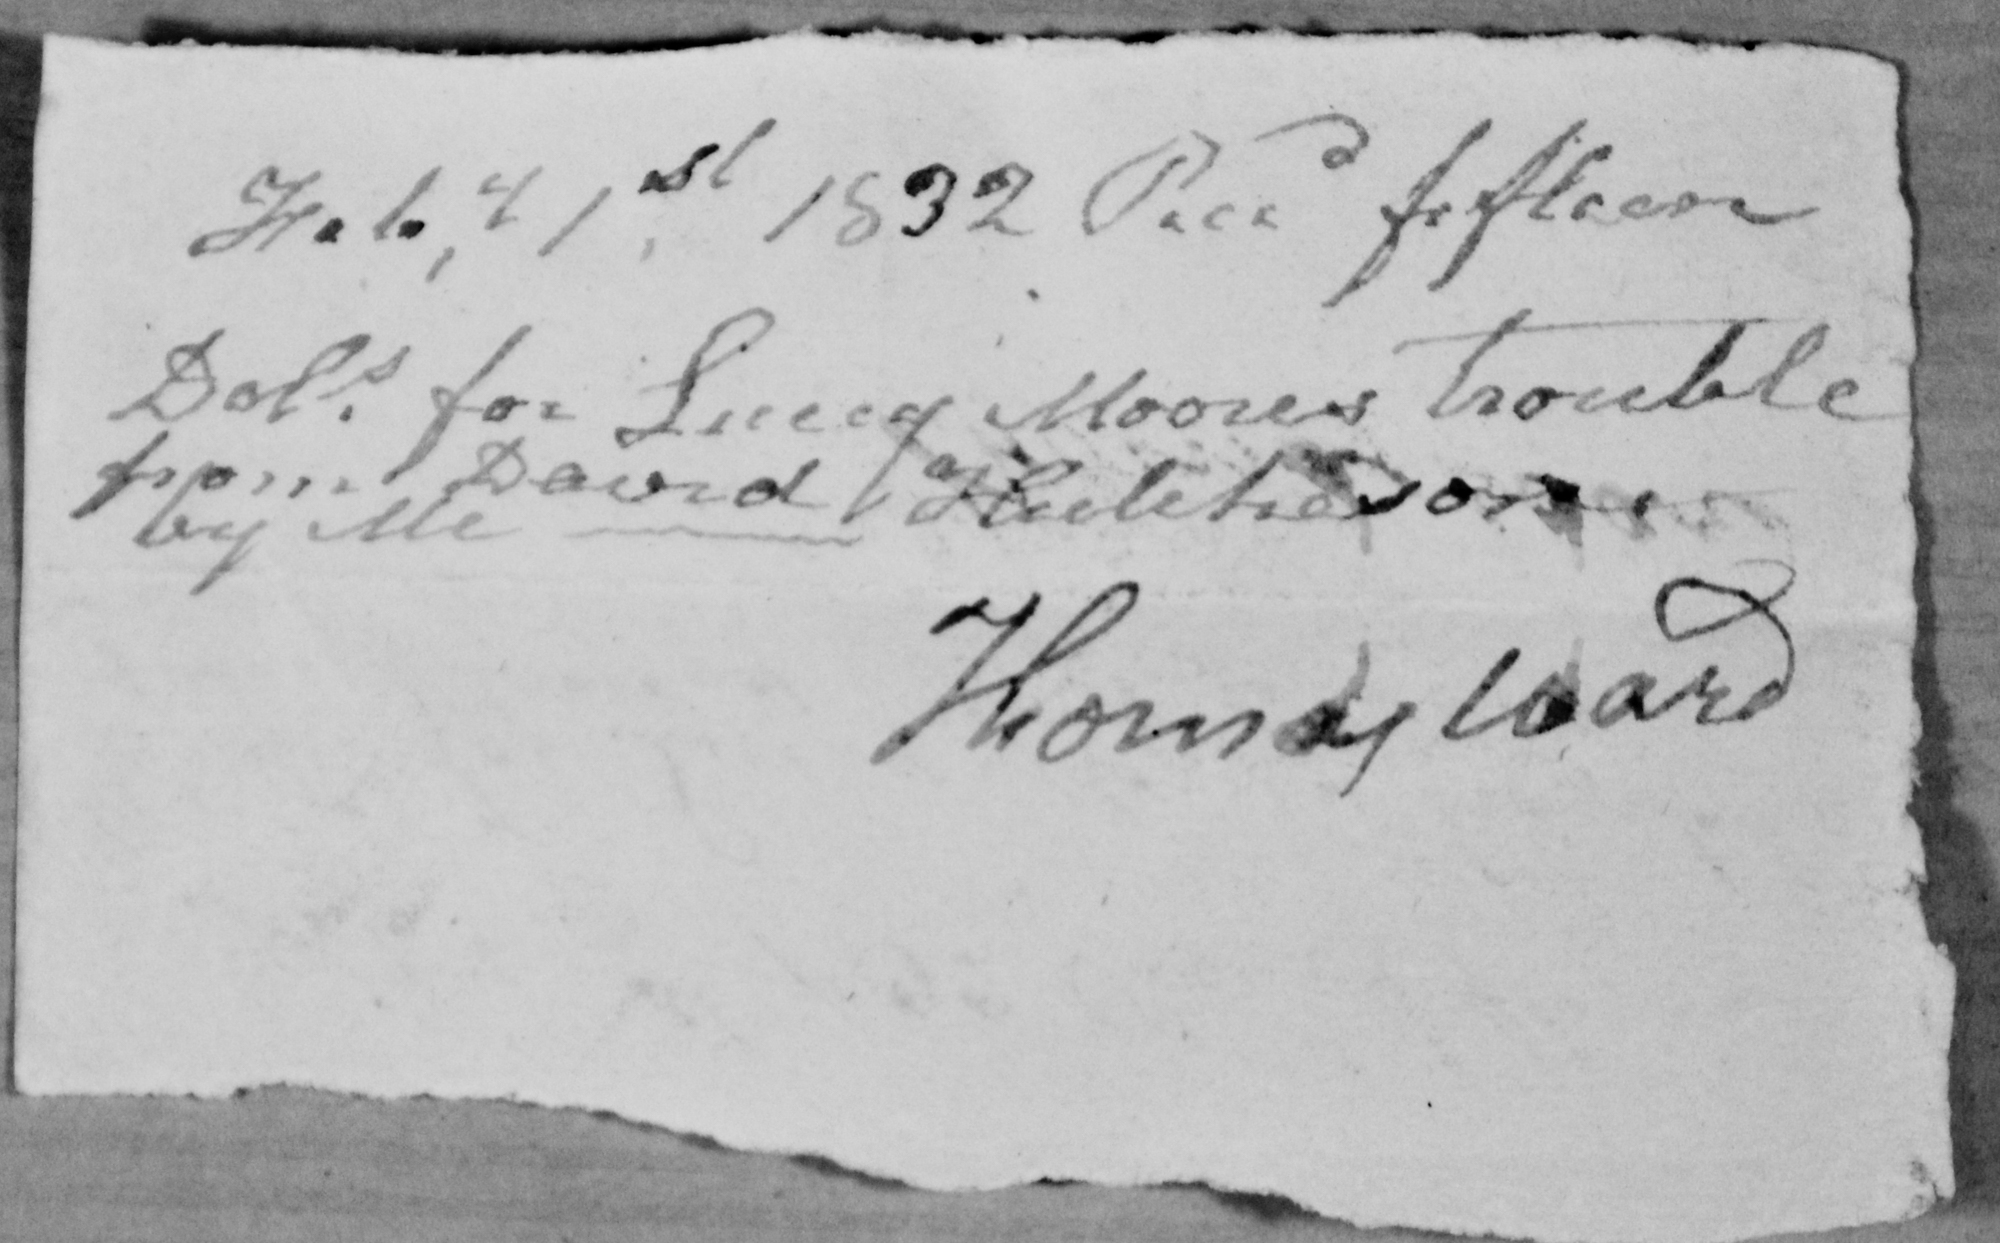 1832 RECEIPT VIA THOMAS WARD - HUTCHISON COLLECTION